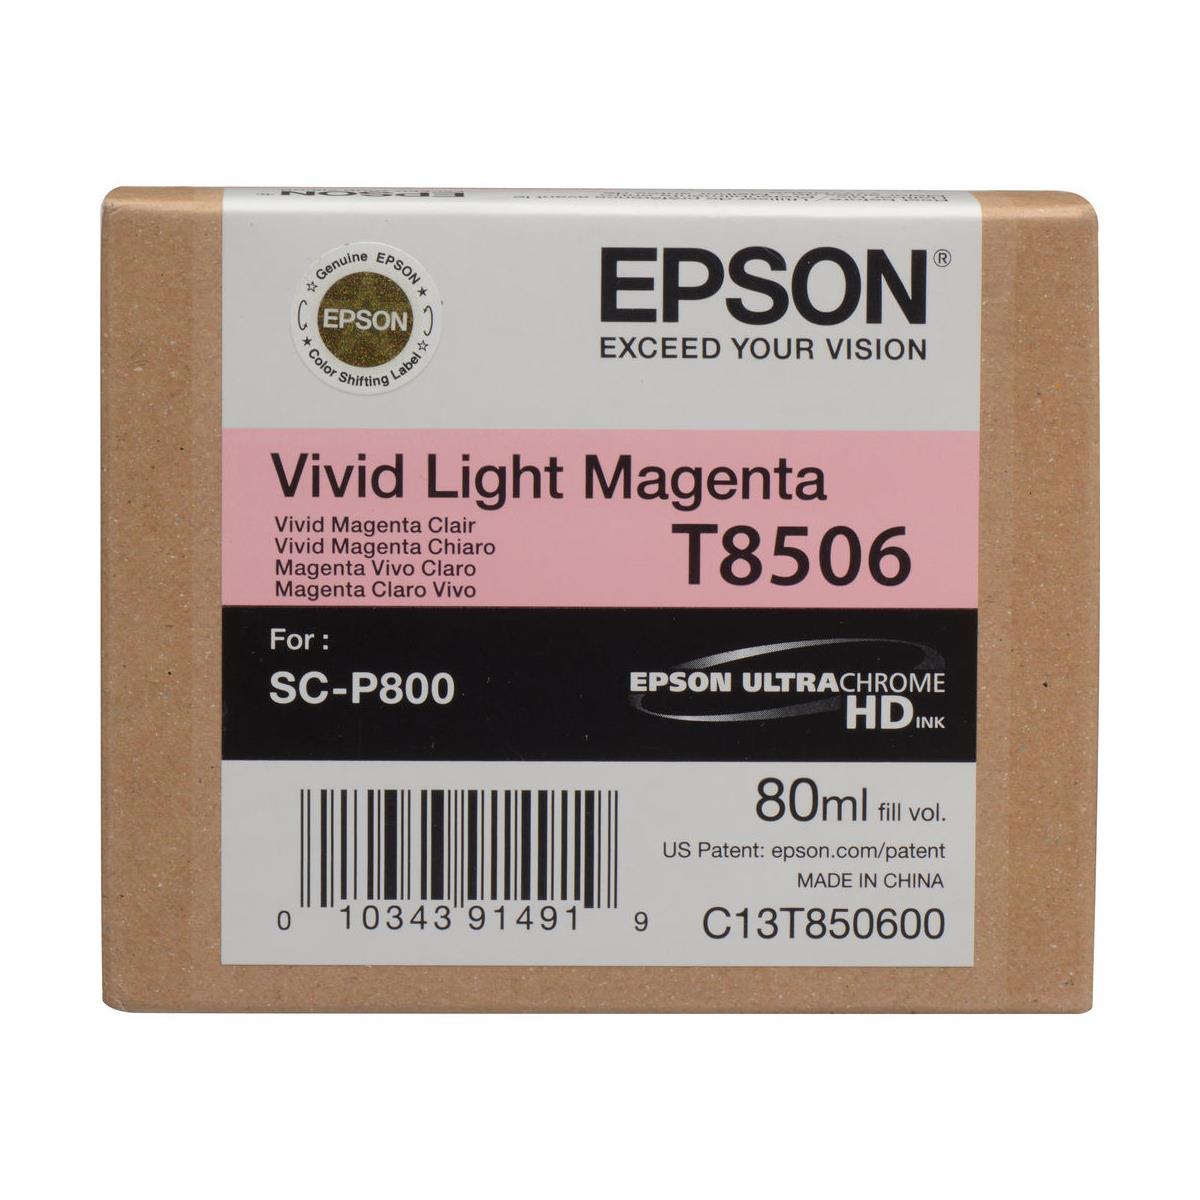 Epson T850600 UltraChrome HD Viv Lt Mag Vivid Light Magenta Ink Cartridge (80 ml)